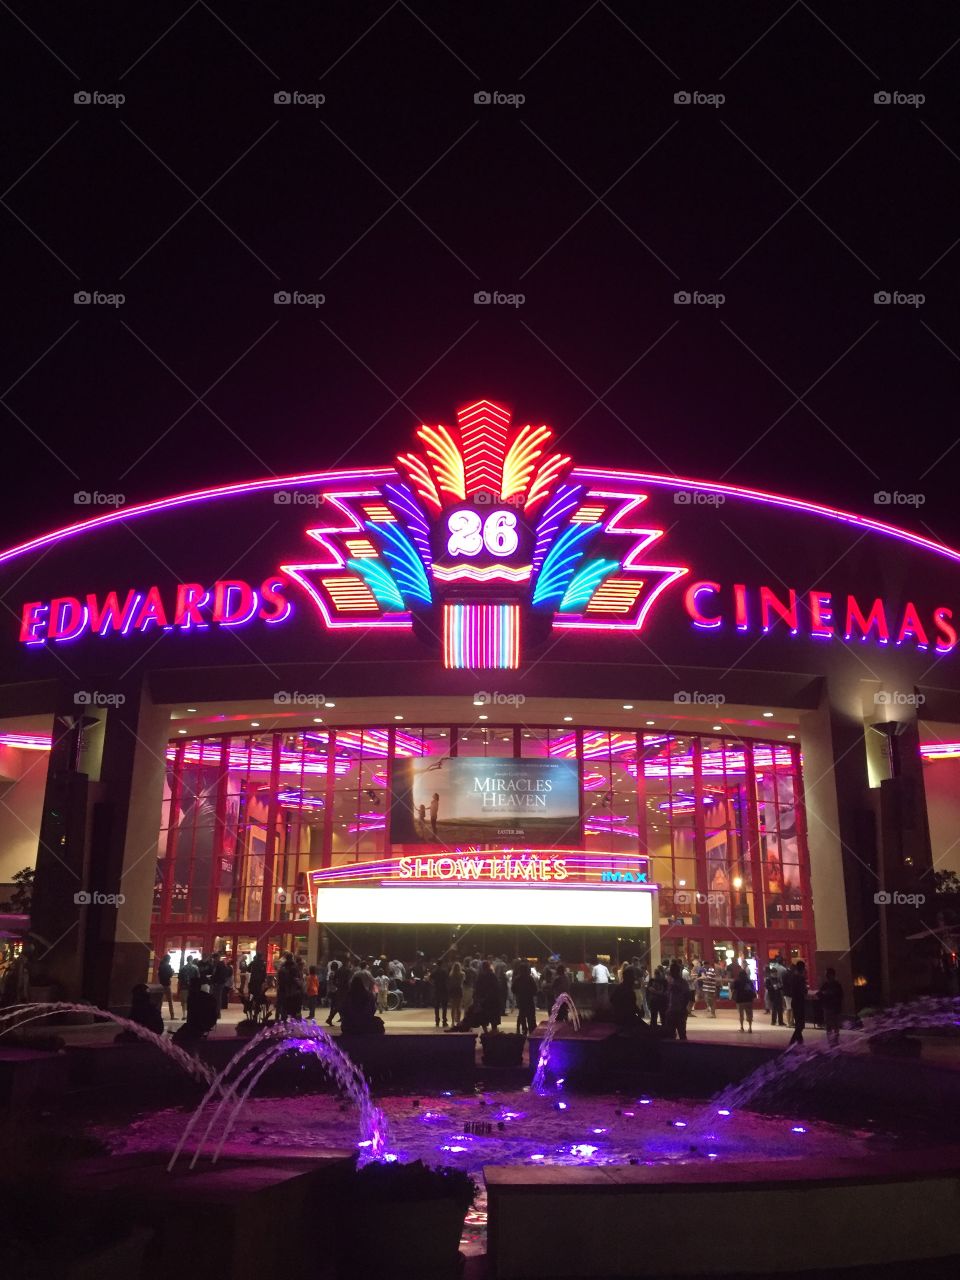 Edwards Cinema #26 in Long Beach, CA